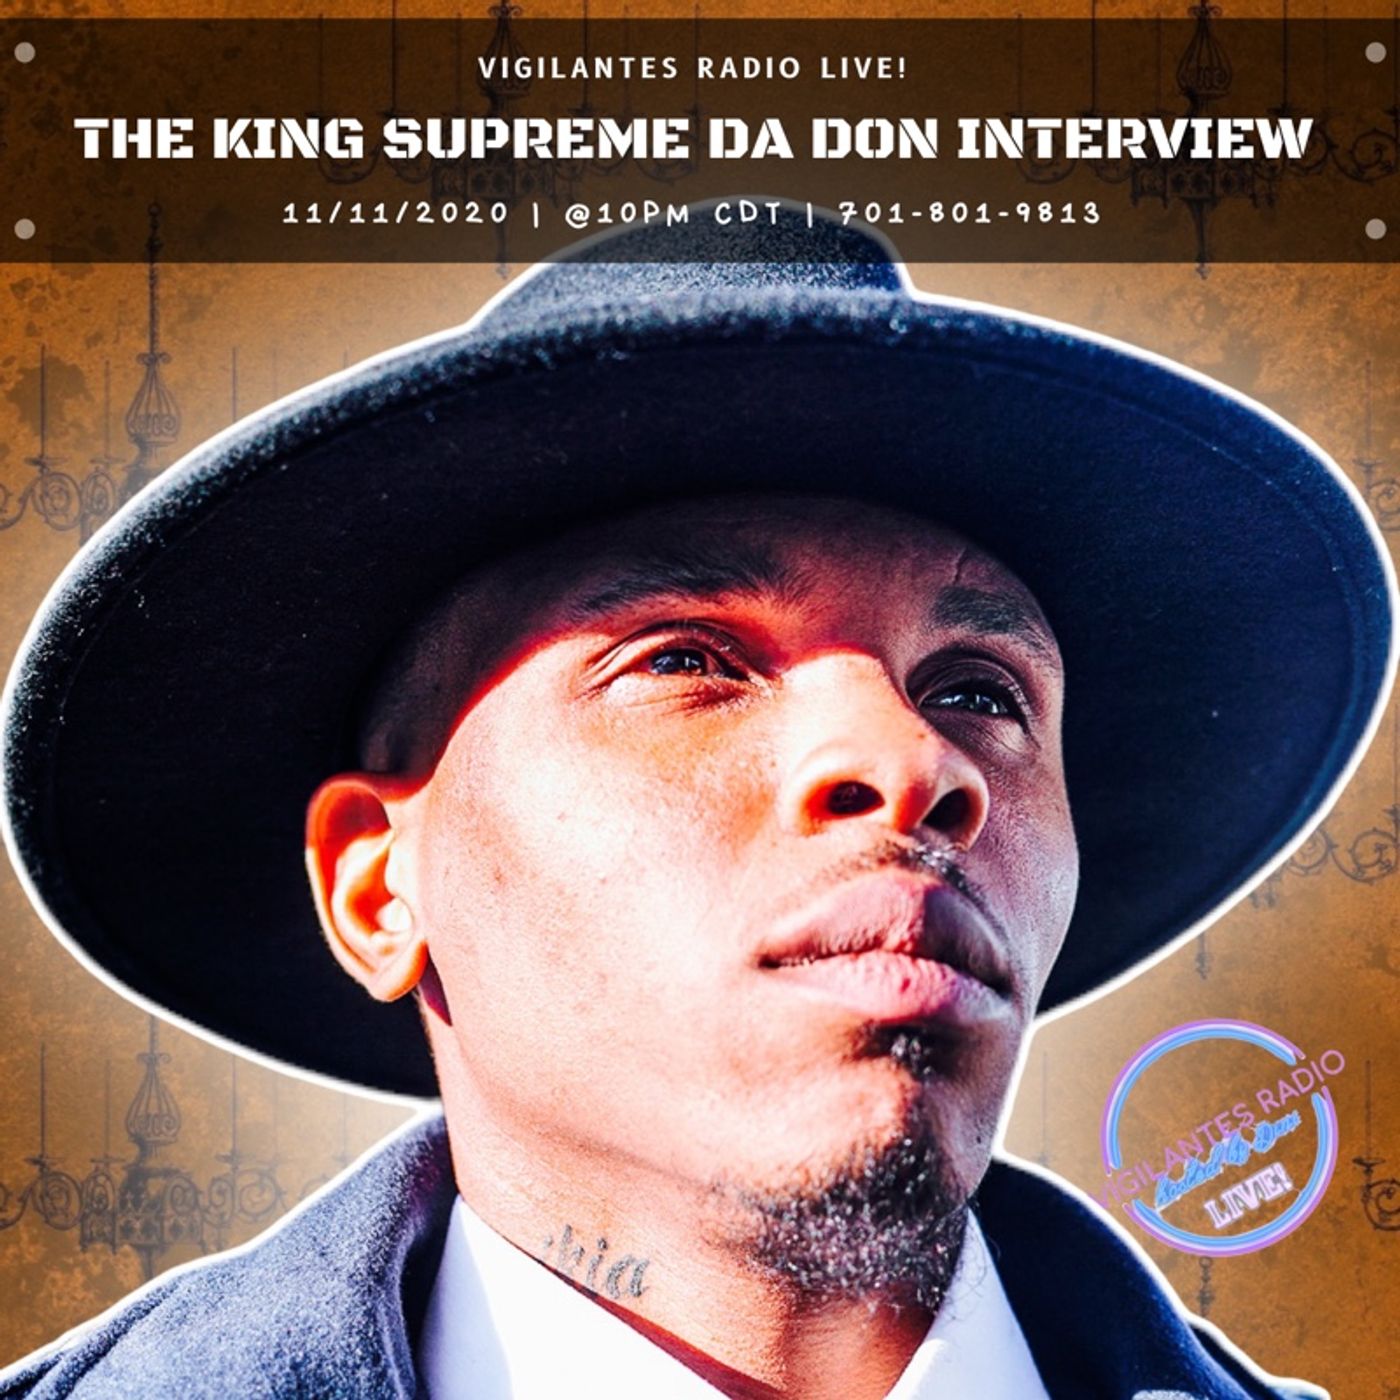 The King Supreme Da Don Interview. Image